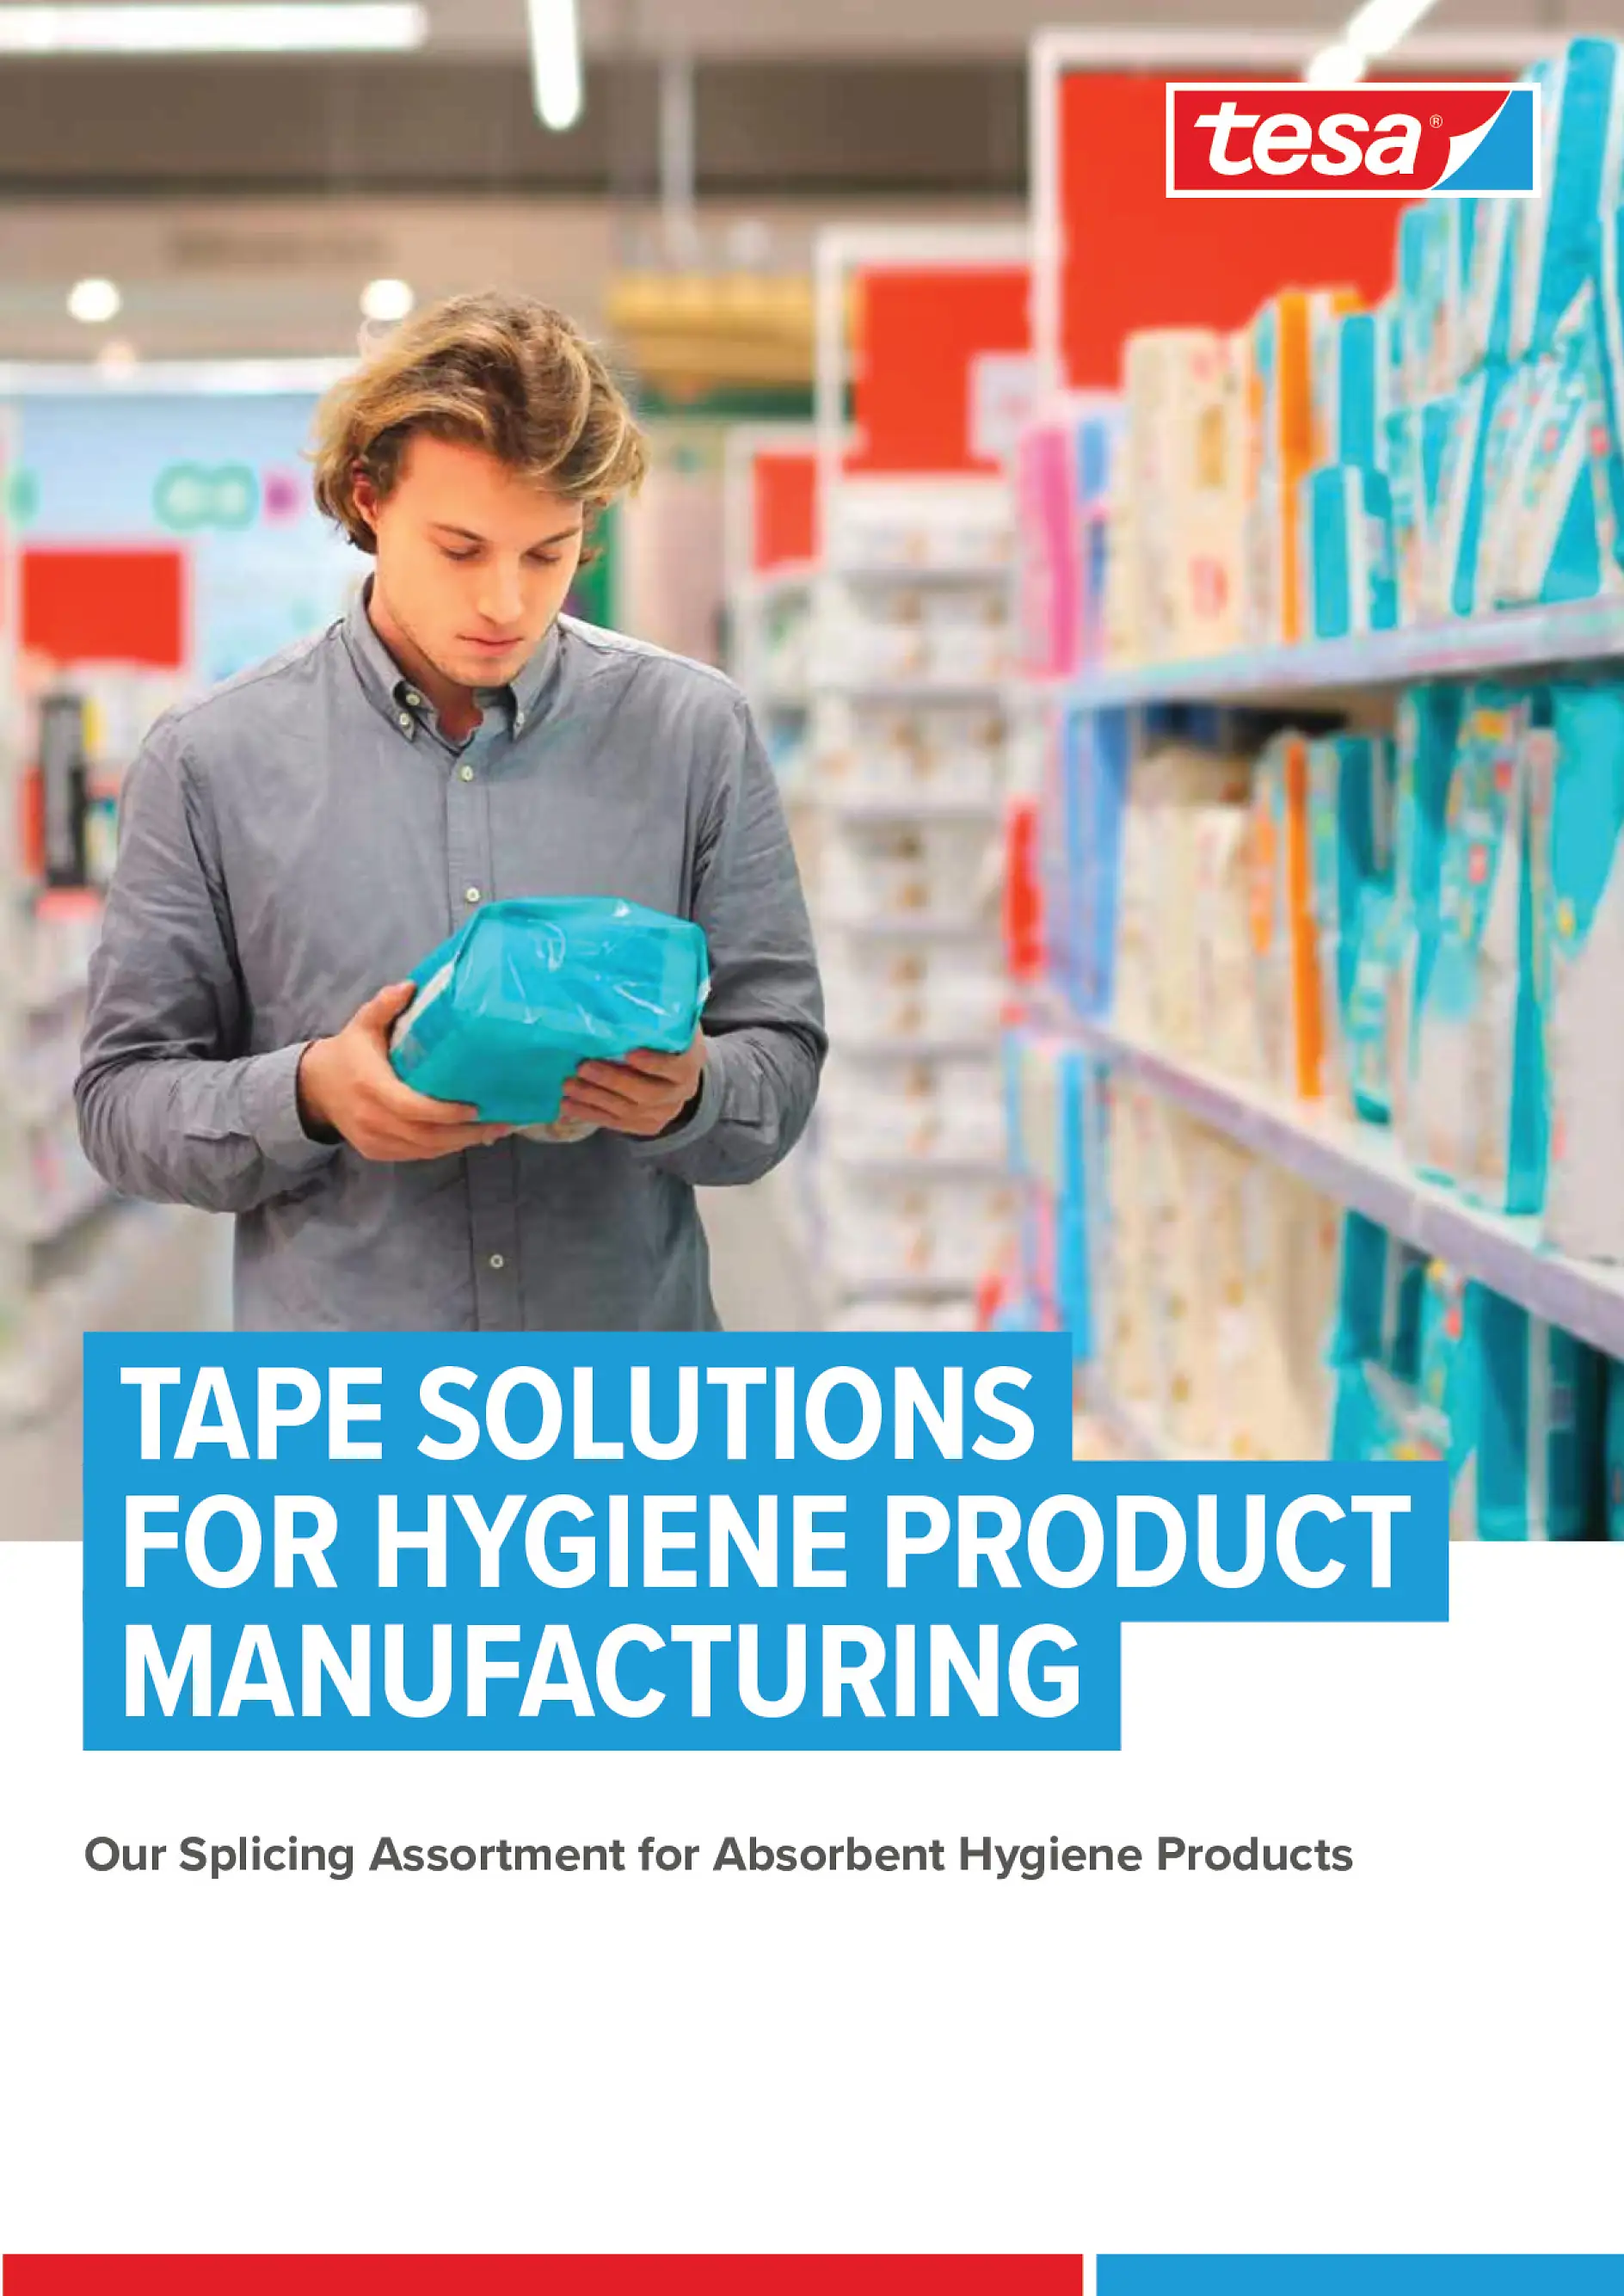 tesa_Hygiene_Products_Manufacturing_web